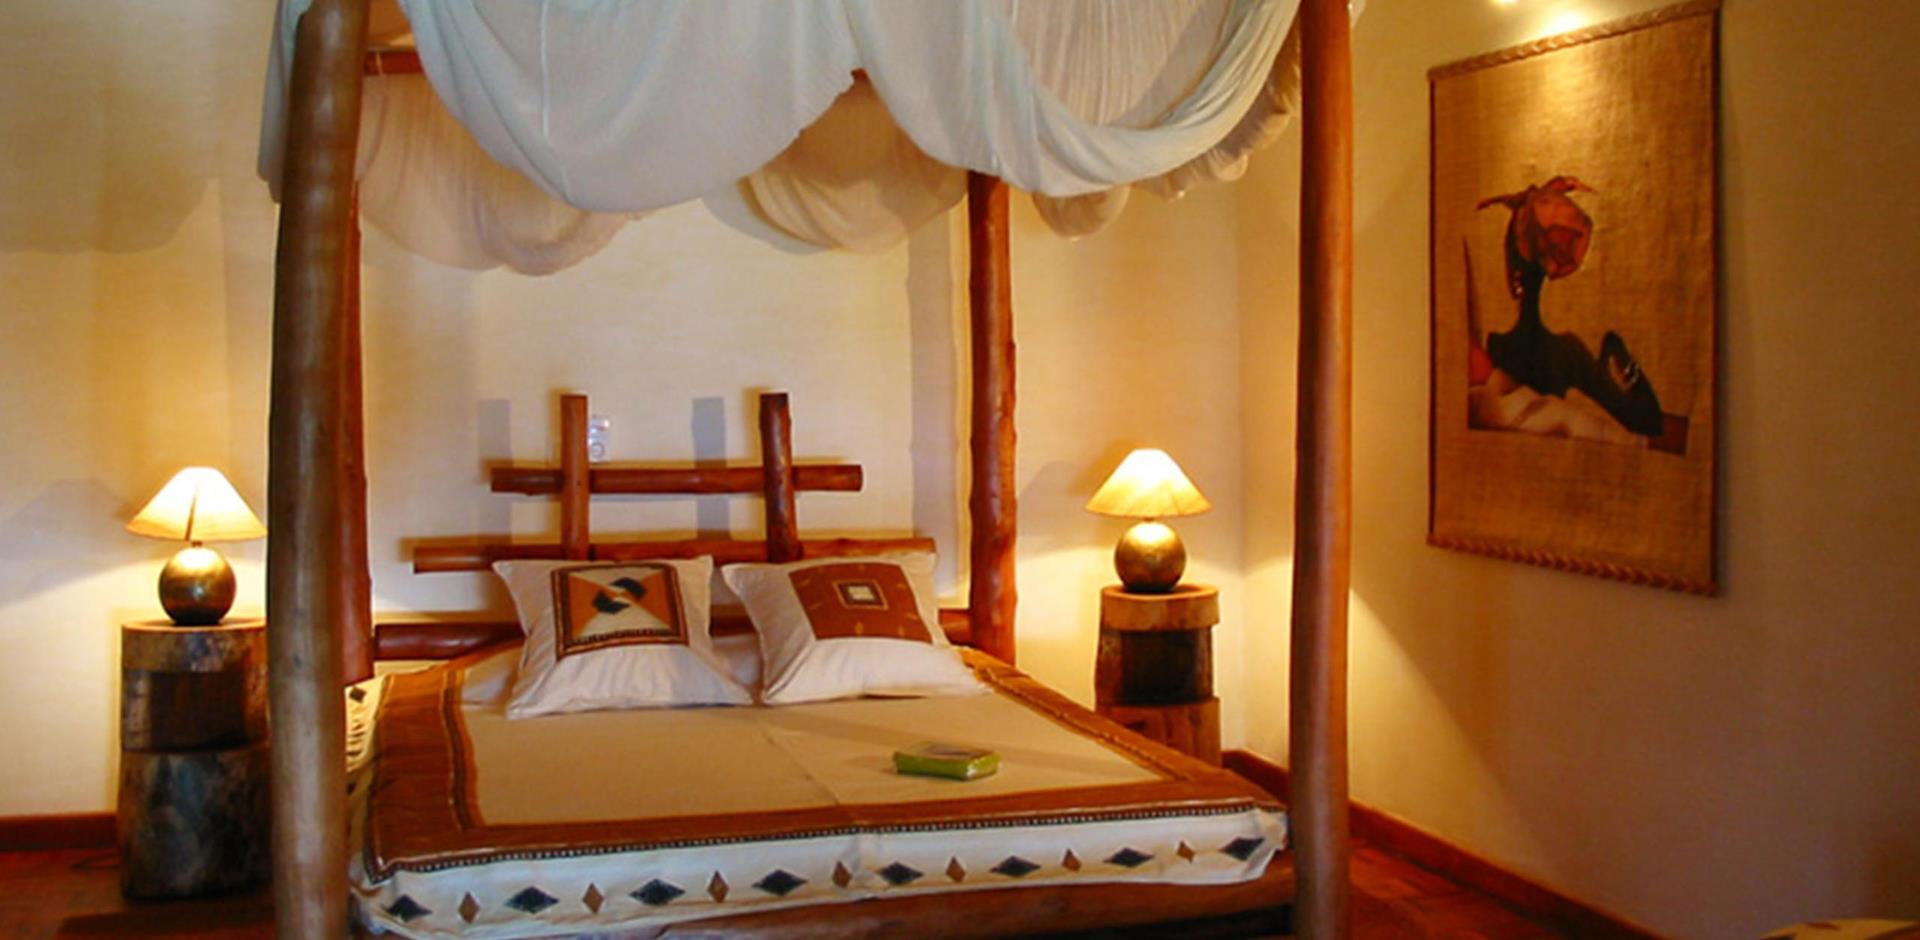 Bedroom, Vanila Hotel & Spa, Madagascar, A&K